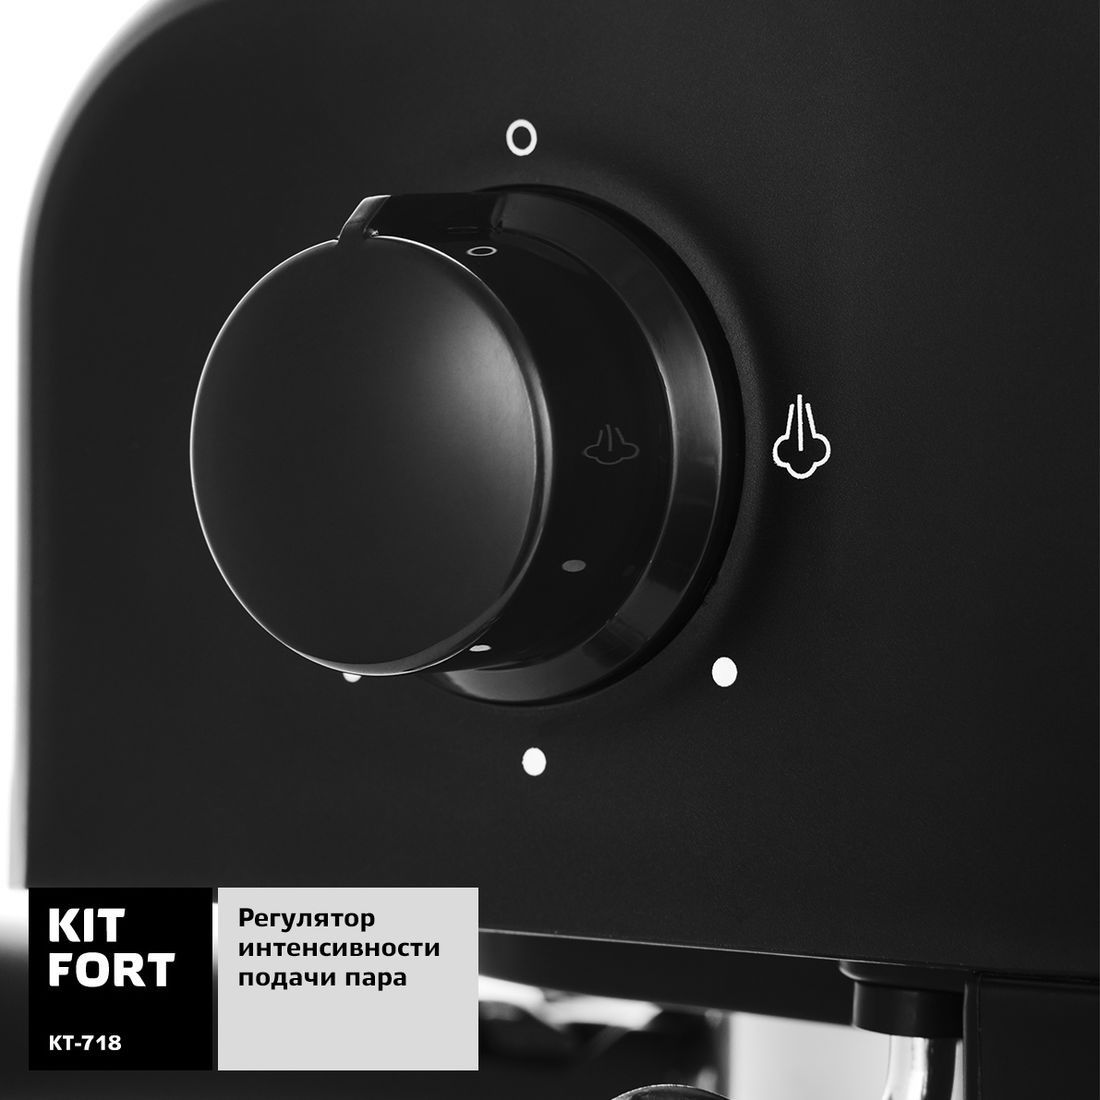   Kitfort -718, black